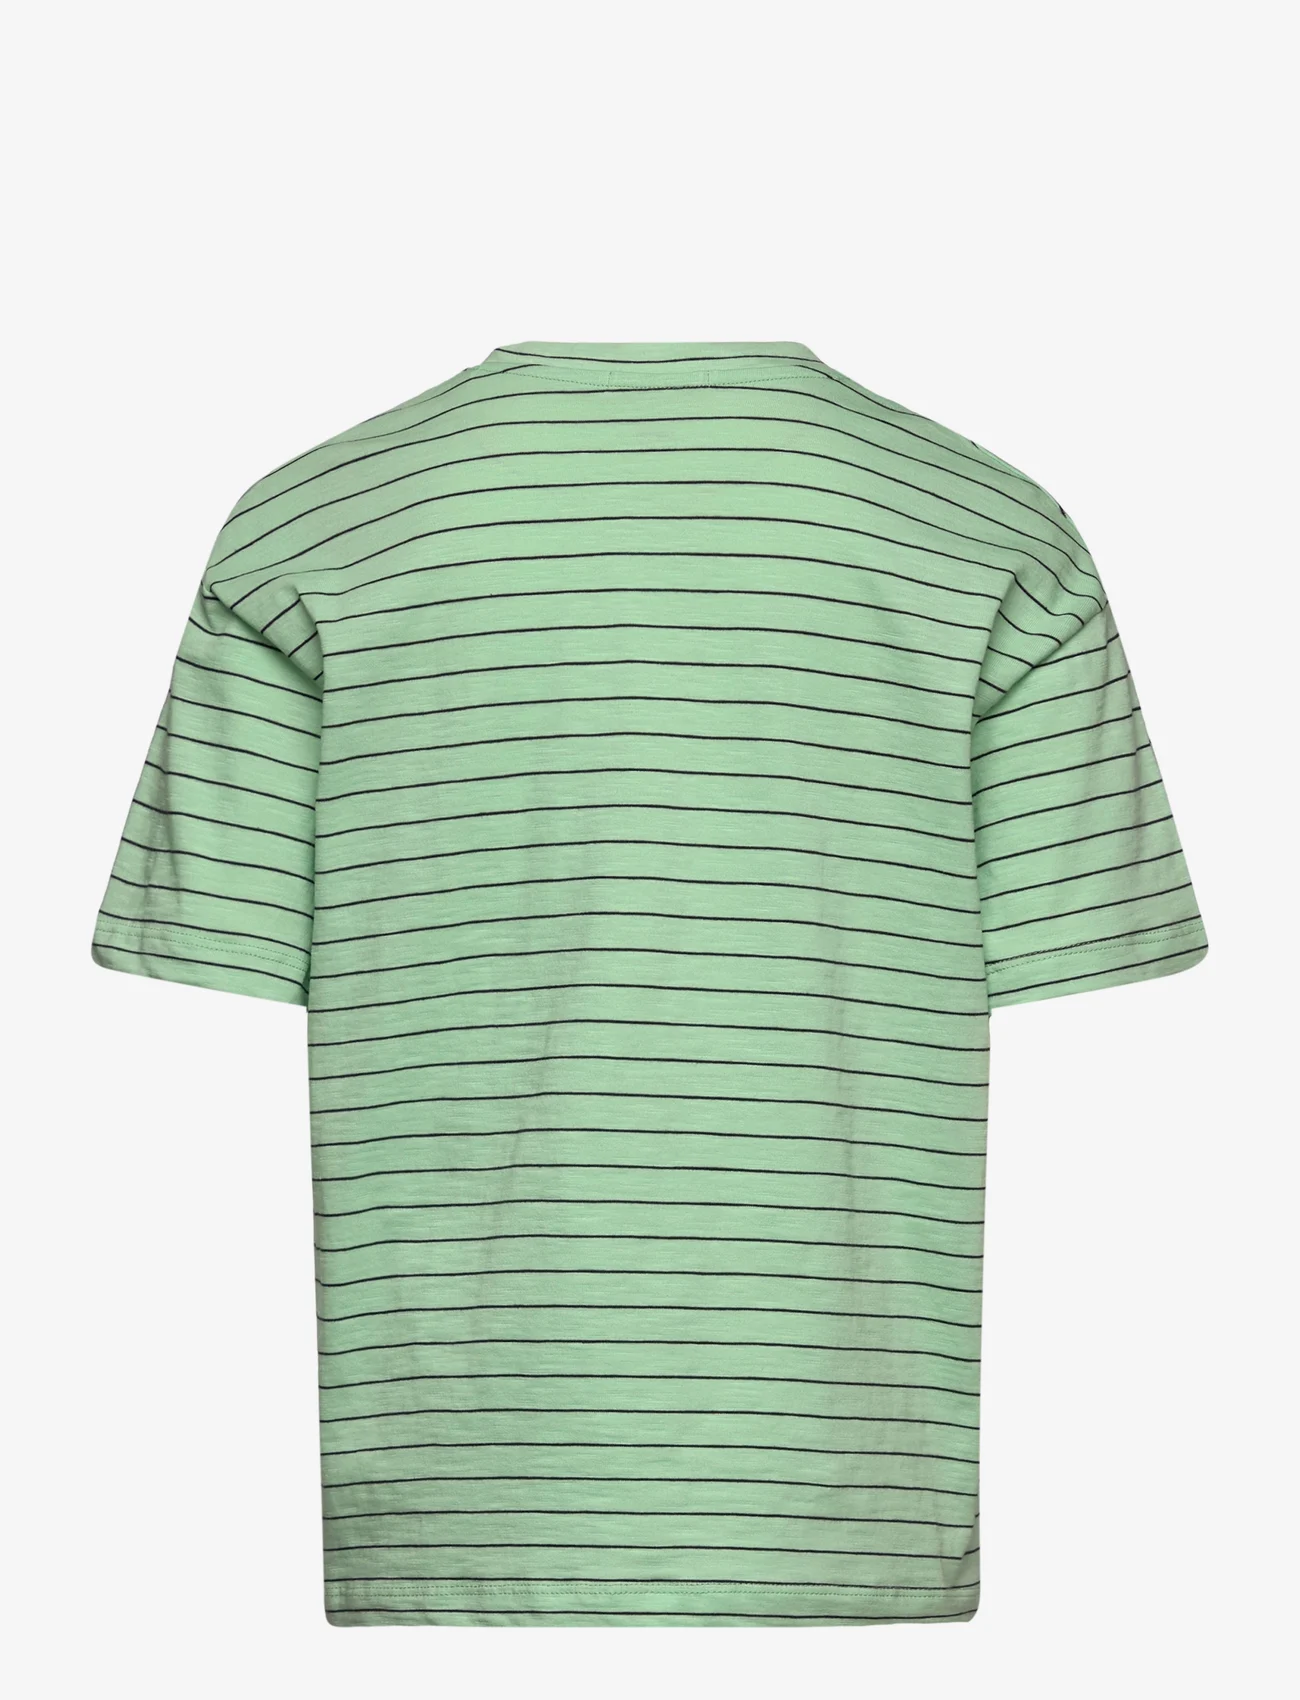 Tom Tailor - oversize striped t-shirt - korte mouwen - pastel apple green grey stripe - 1